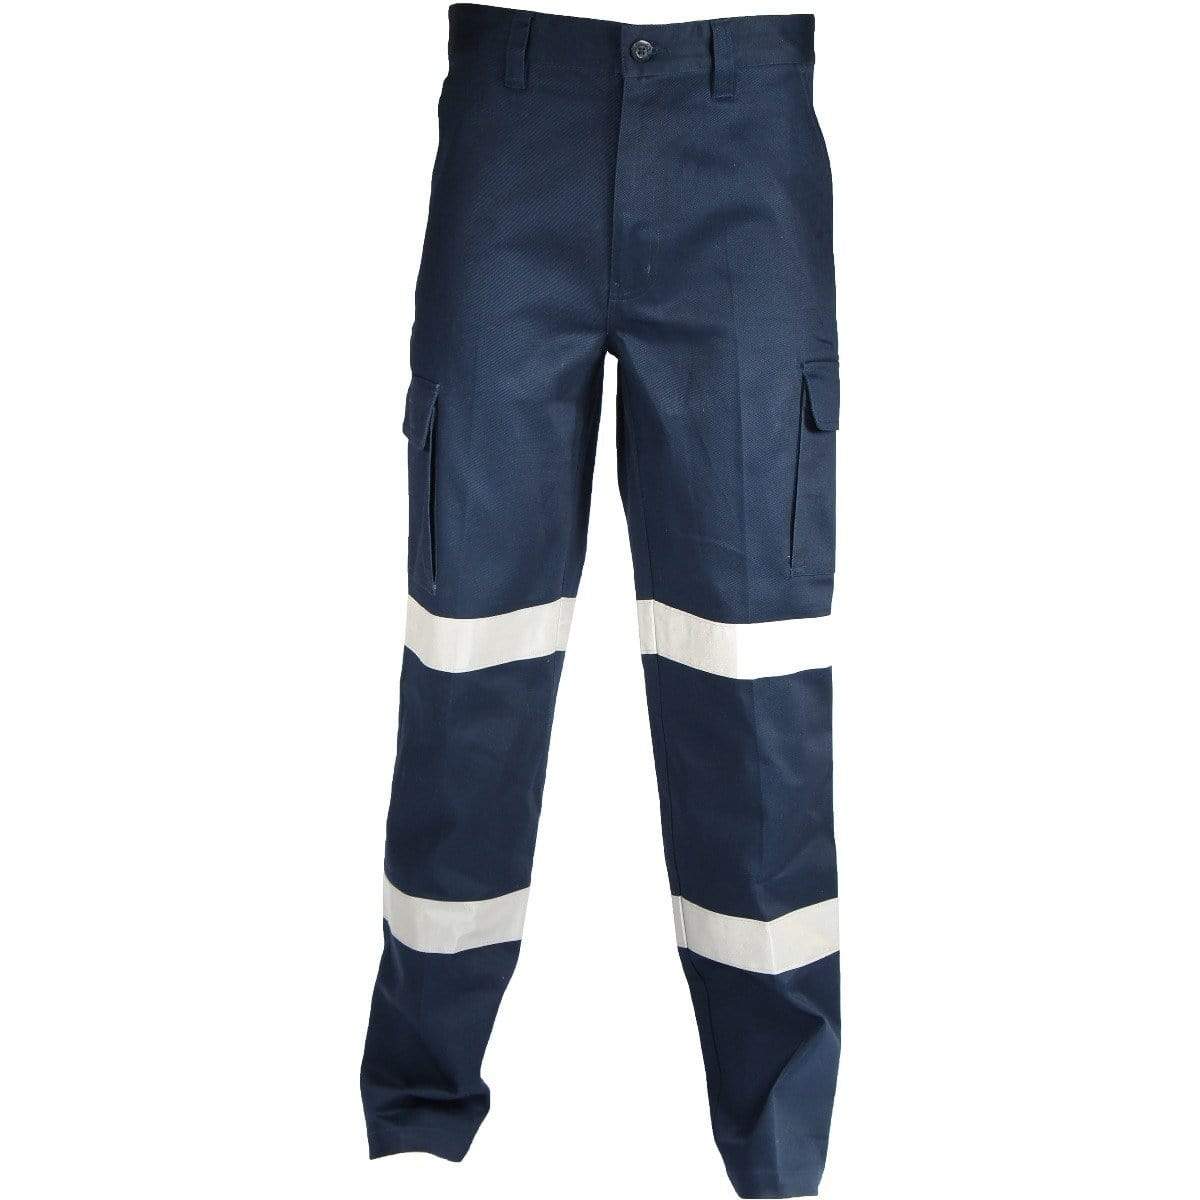 Dnc Workwear Double Hoop Taped Cargo Pants - 3361 Work Wear DNC Workwear Navy 72R 